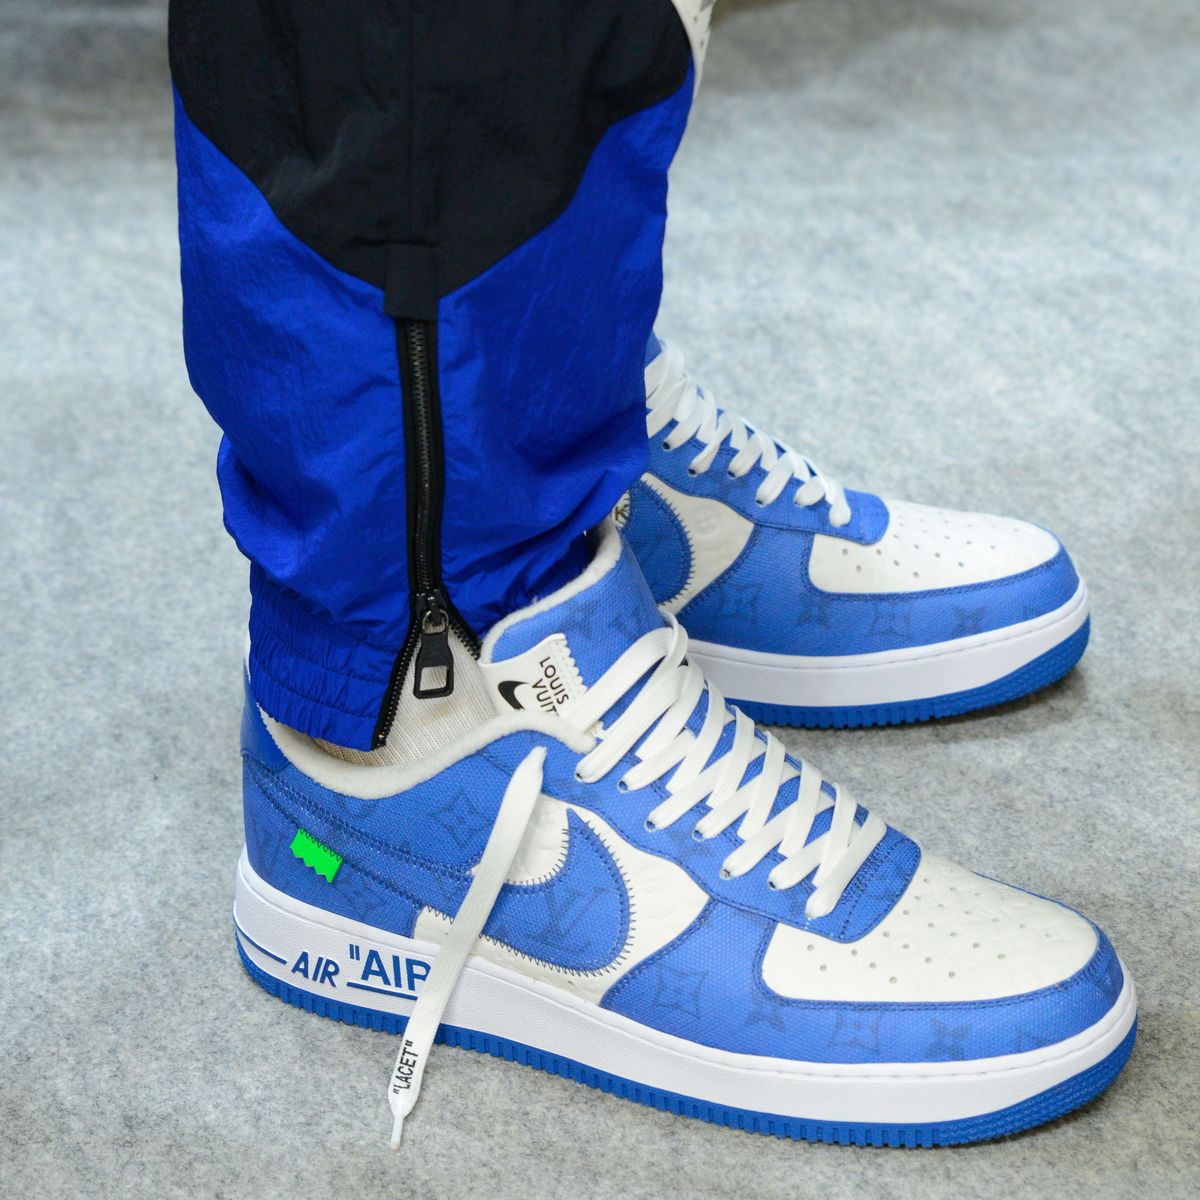 Louis Vuitton reinventa las zapatillas para hombre Nike Air Force 1